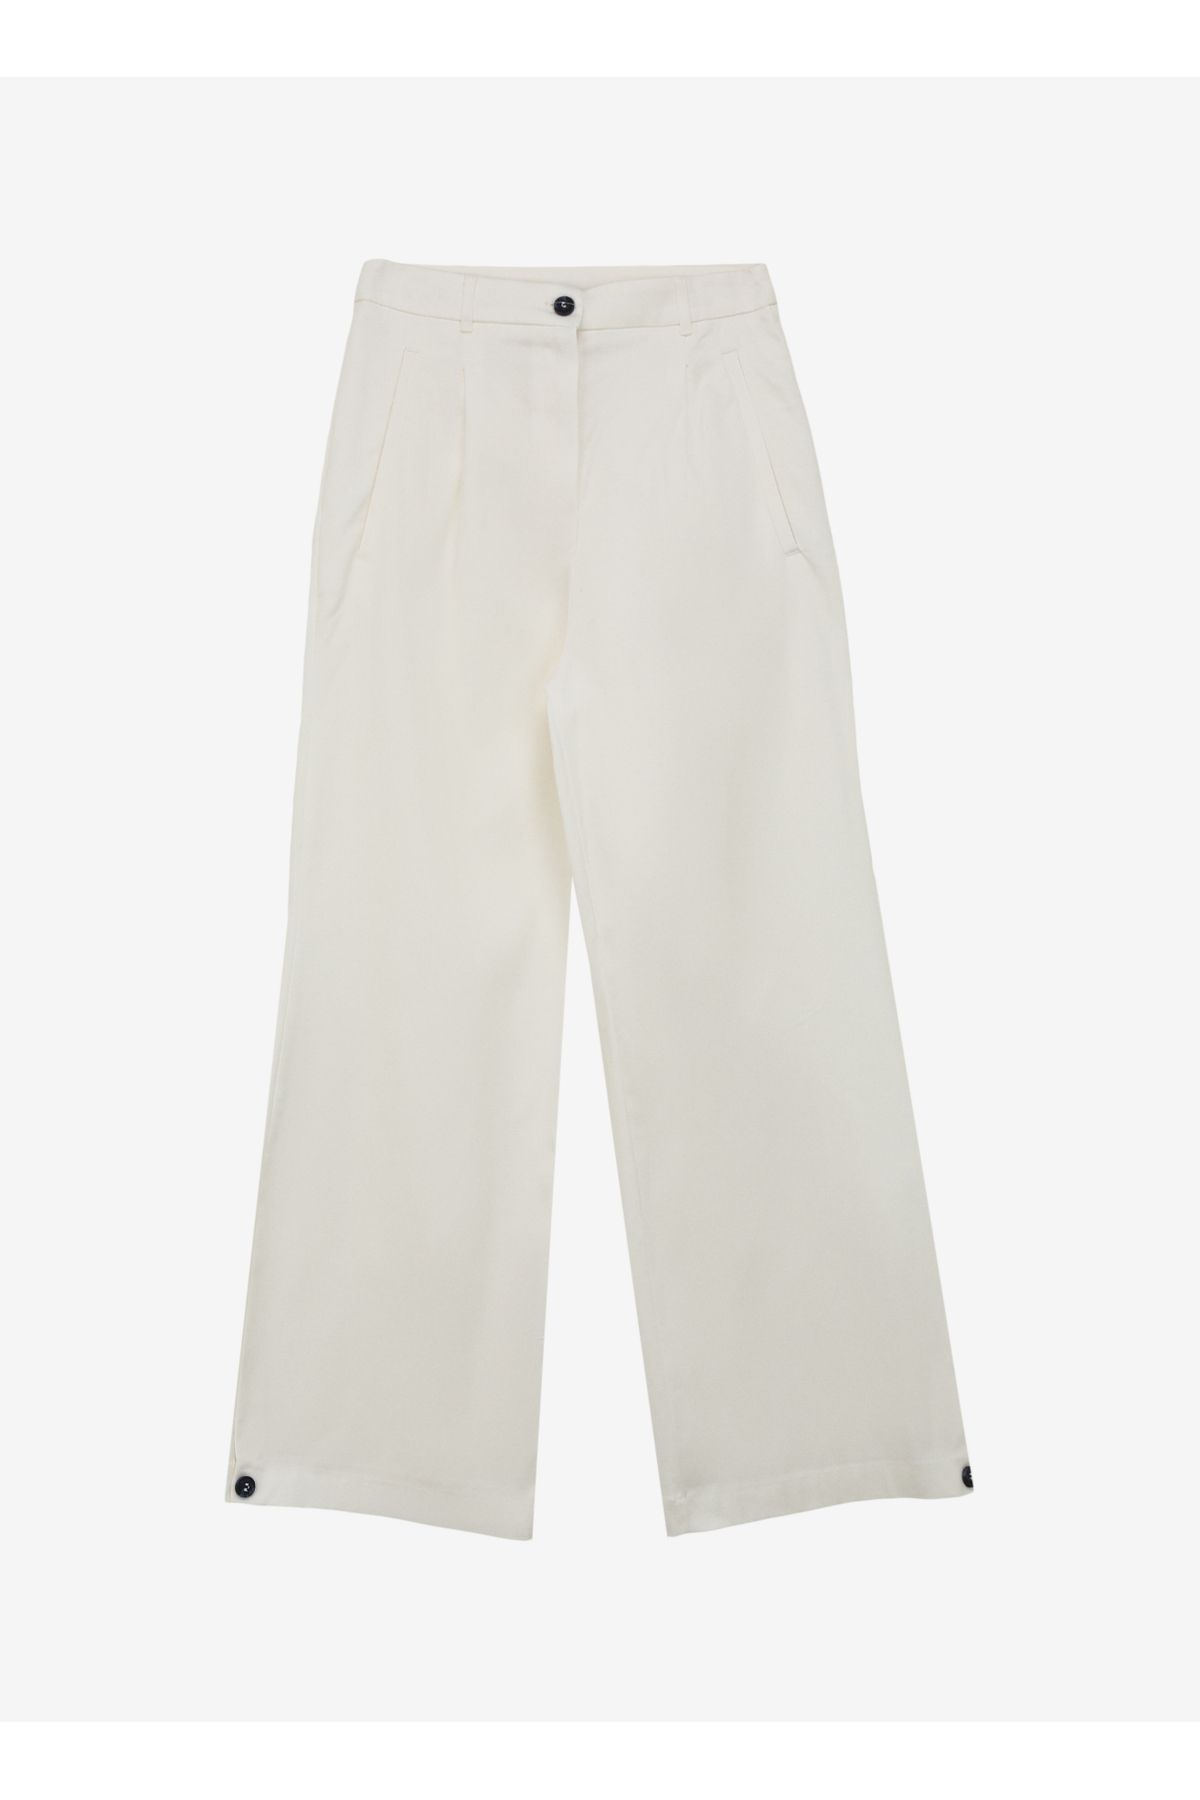 Fabrika Kırık Beyaz Kadın Bol Kesim Pantolon F4SL-PNT0229